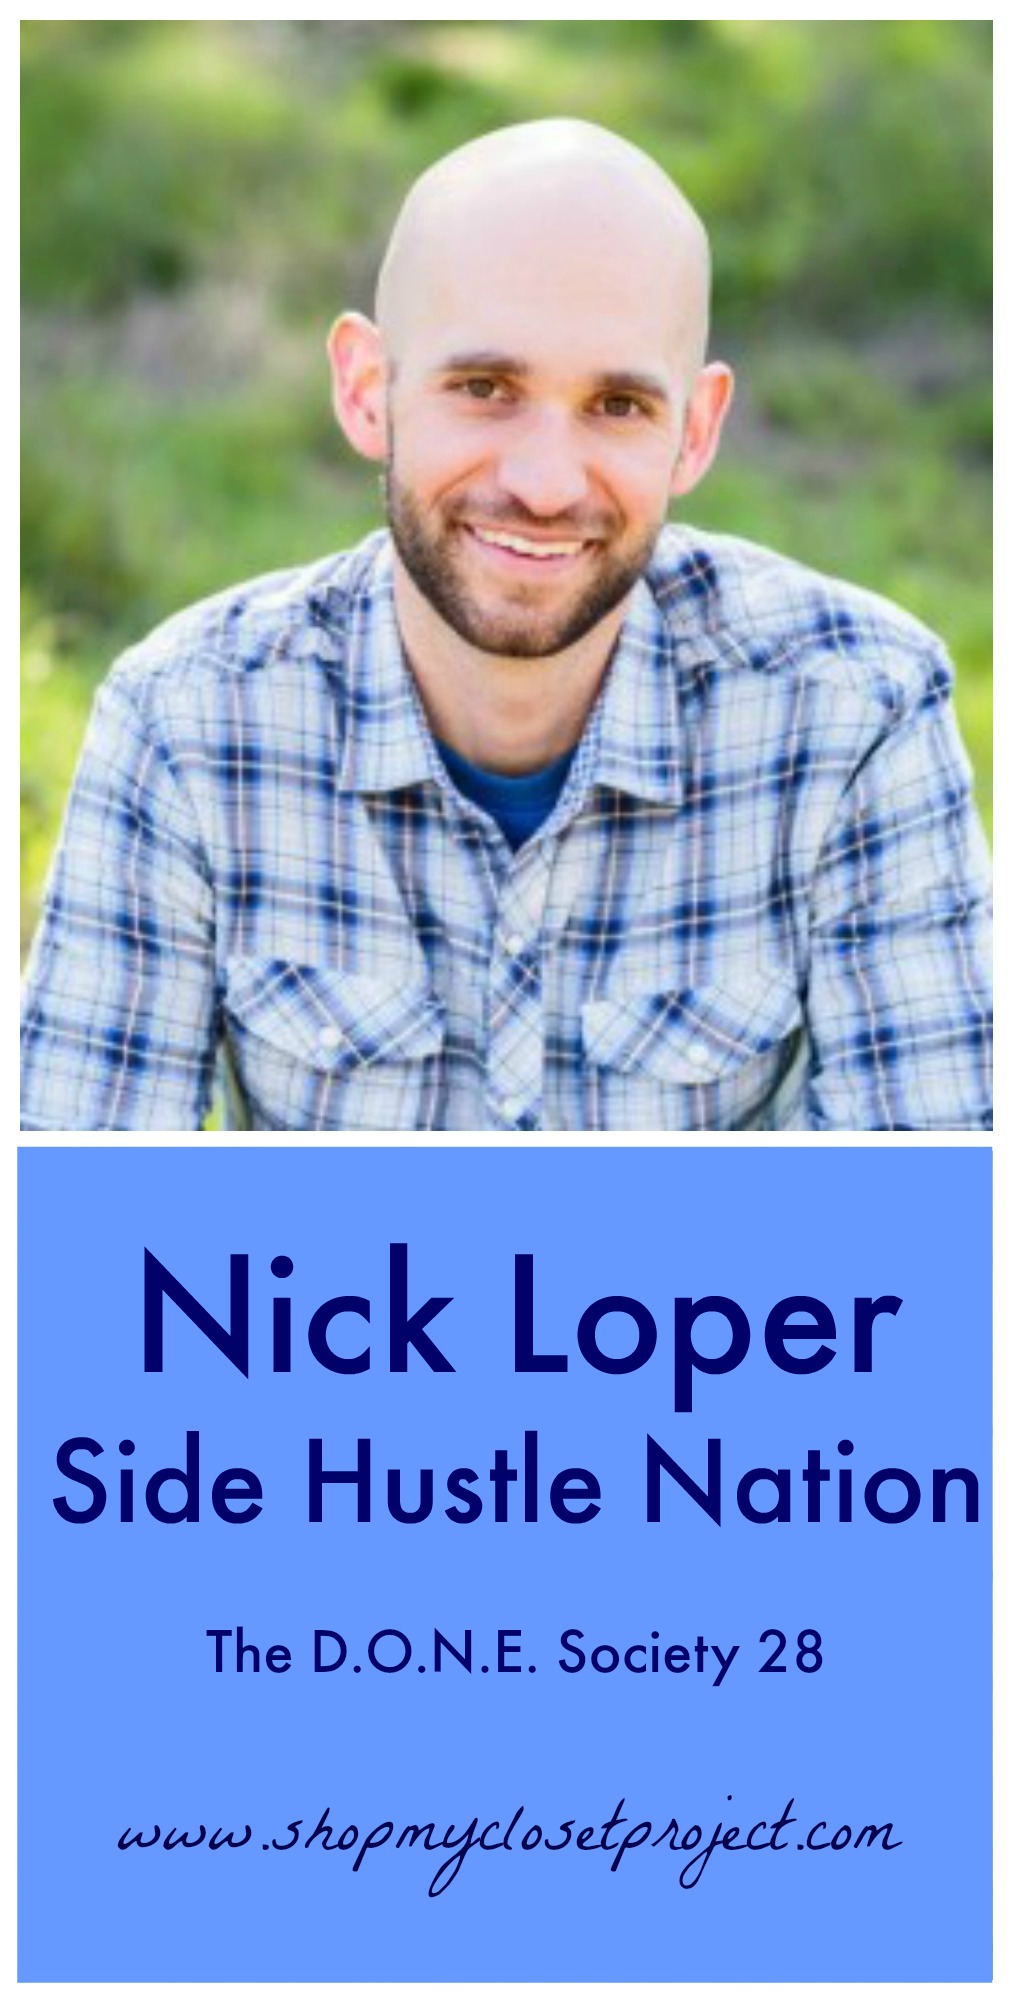 Nick Loper-The D.O.N.E. Society 28